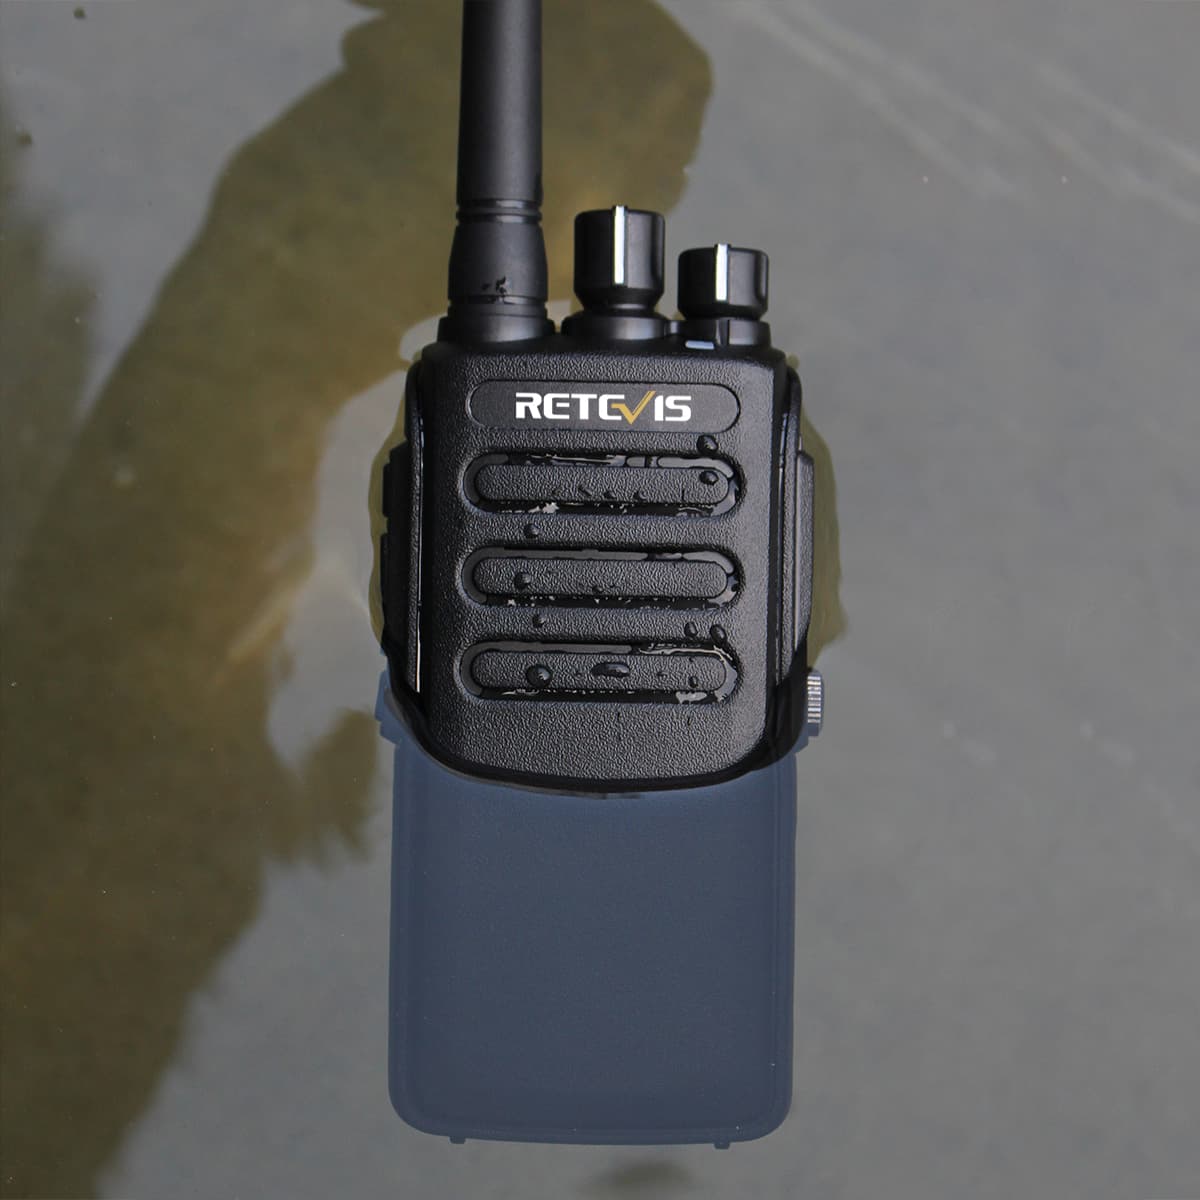 Retevis RT81 waterproof DMR walkie talkie